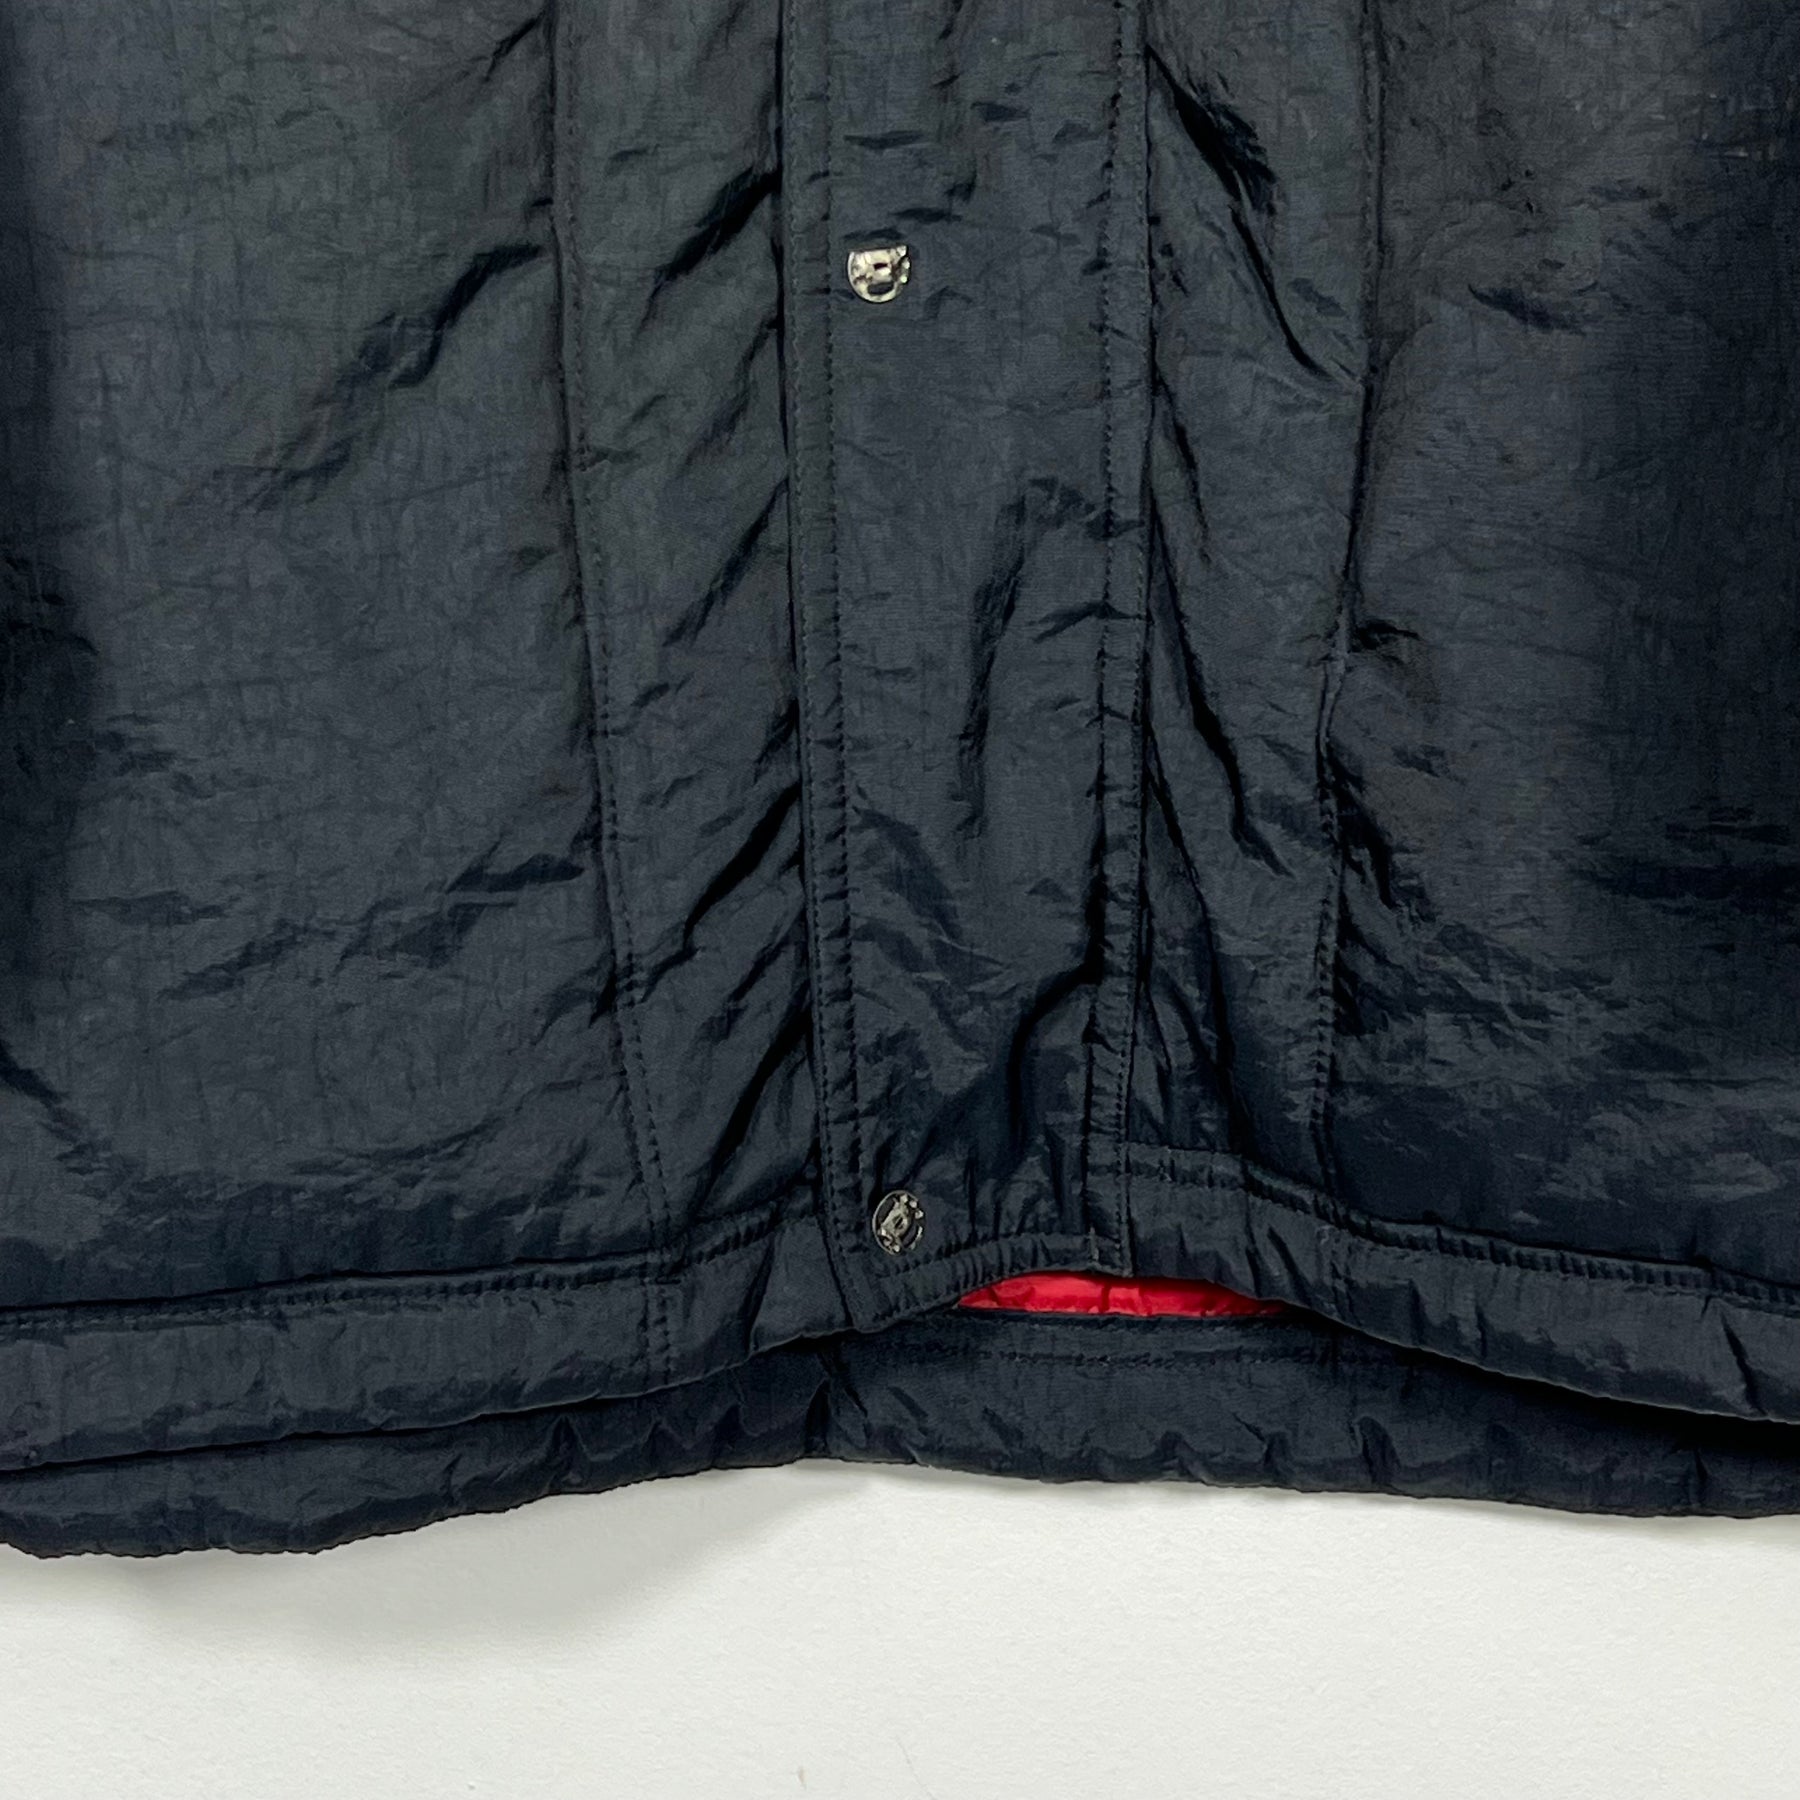 Vintage Nike Insulated Jacket - Men's Medium